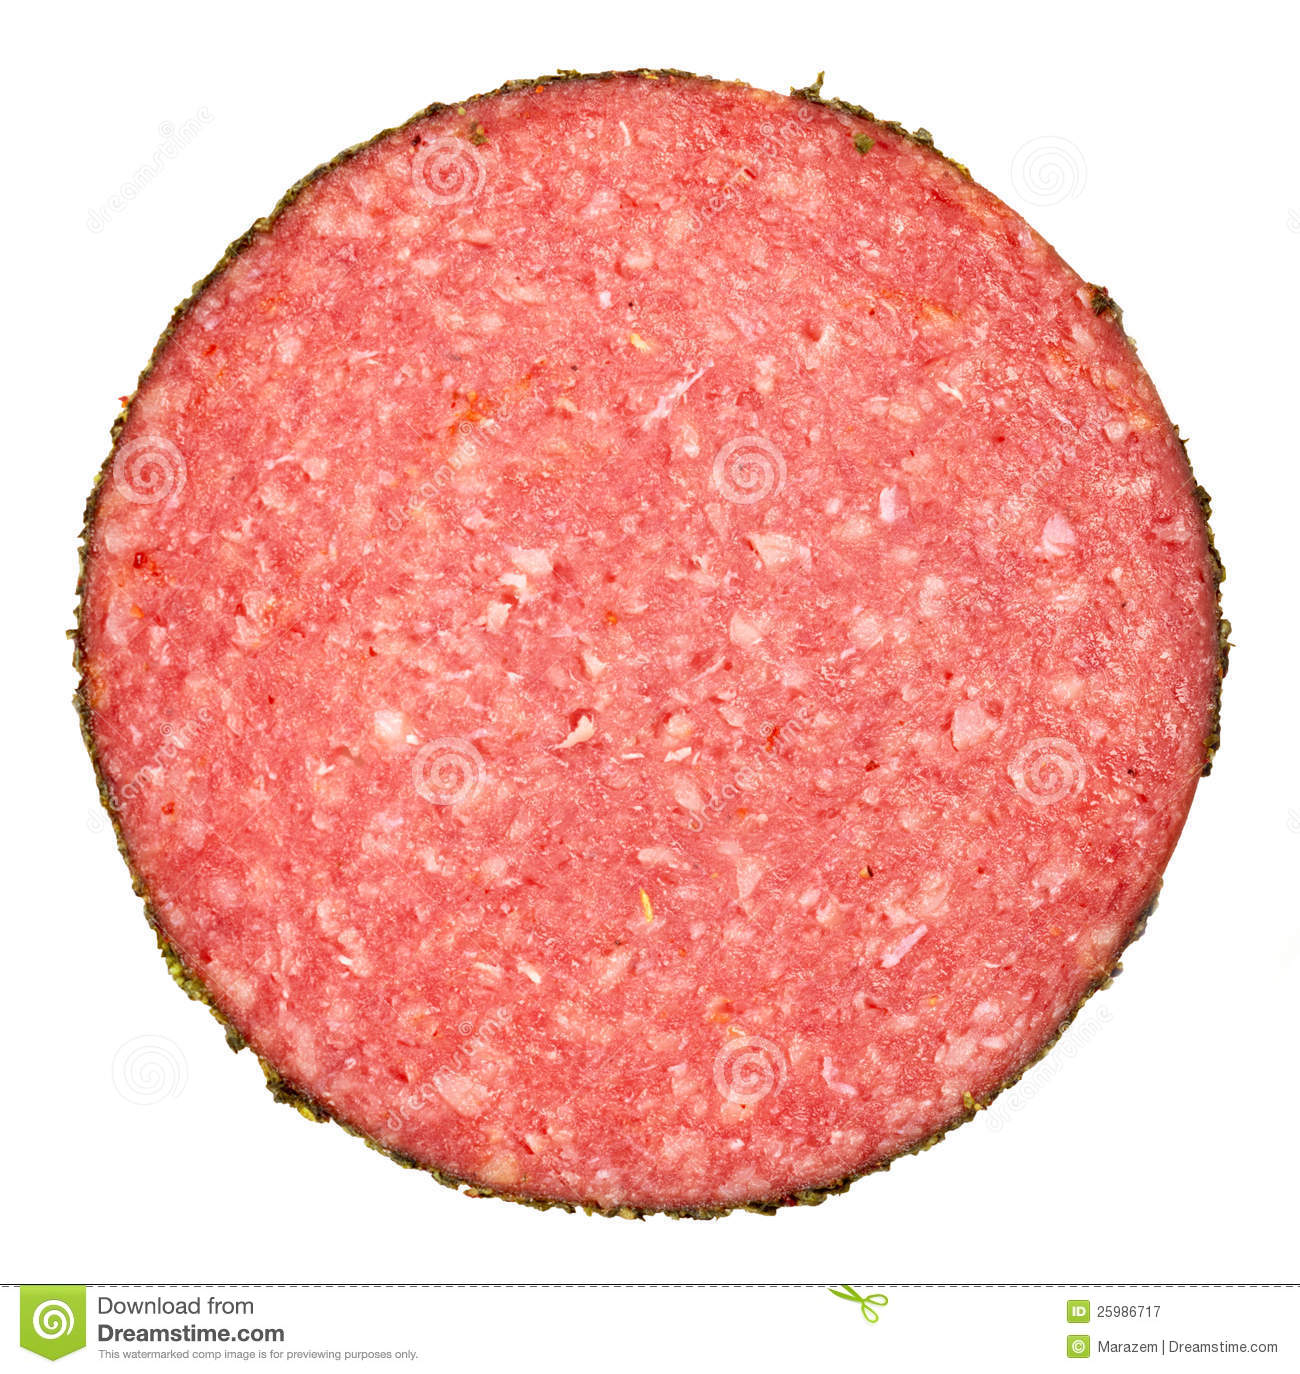 More Similar Stock Images Of   Slice Of Salami Sausage  